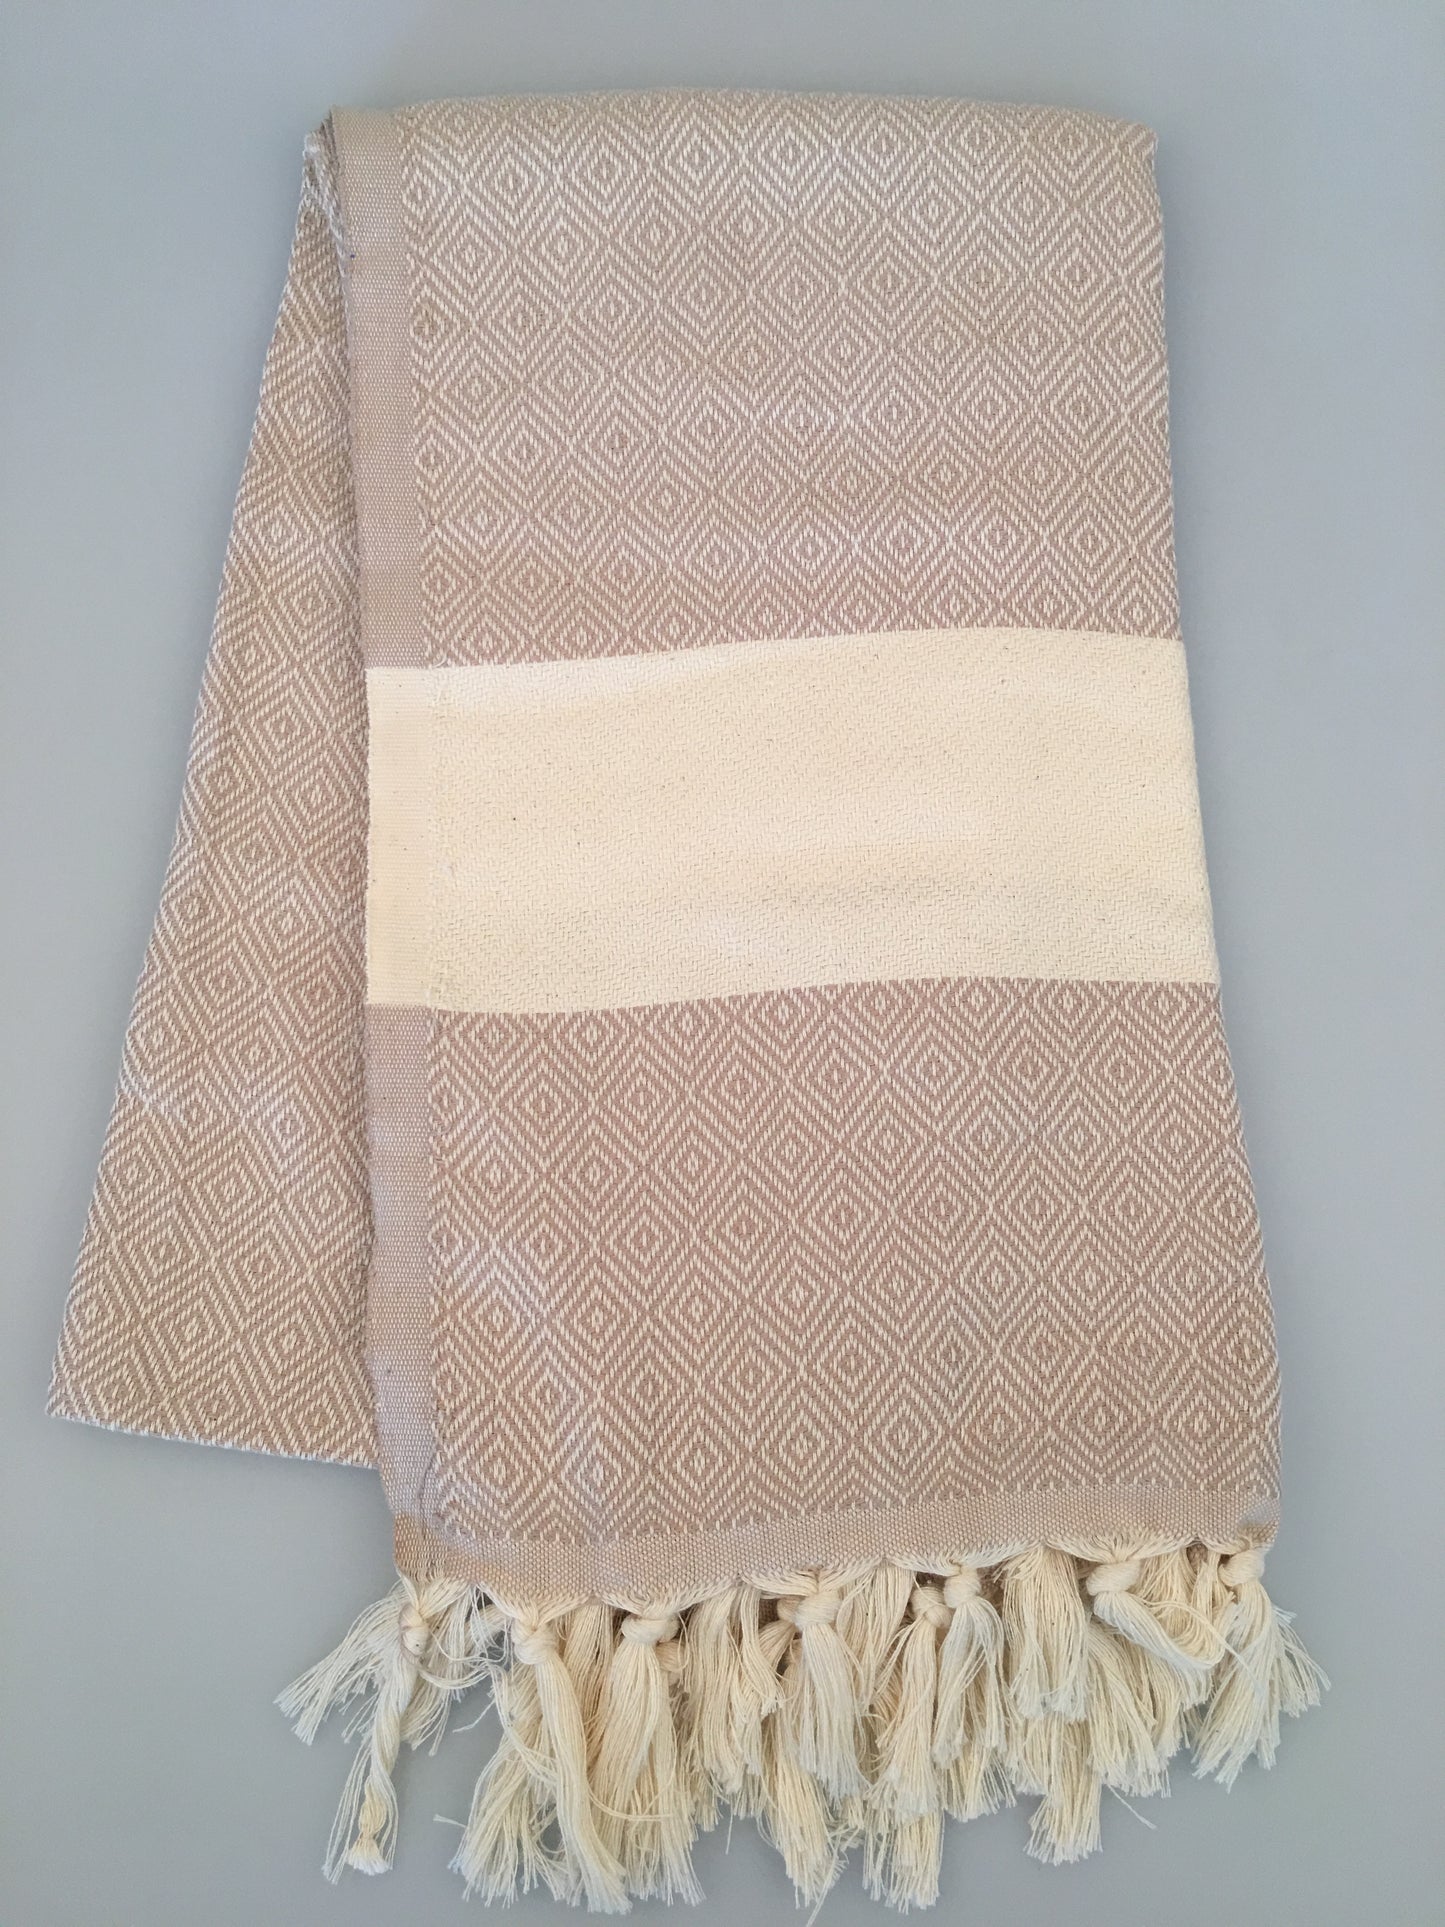 200pcs/LOT Lycia Myra Turkish Towel Beach Peshtemal (430g) - Wholesale Price